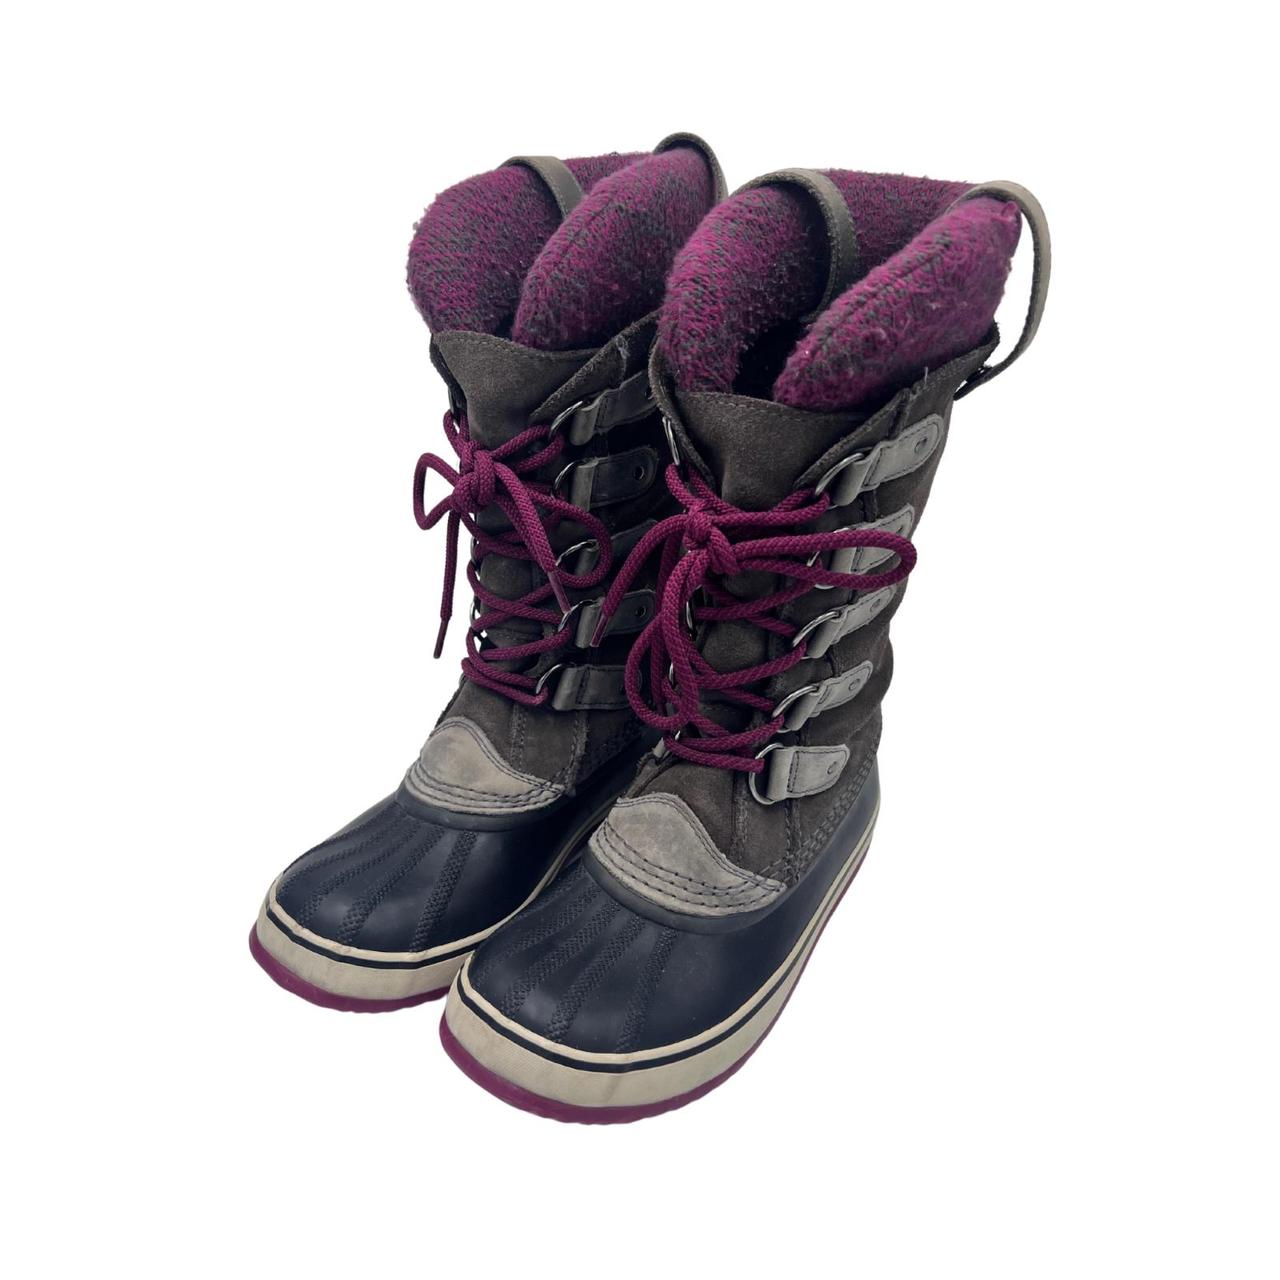 Sorel Women's Grey and Purple Boots (6)